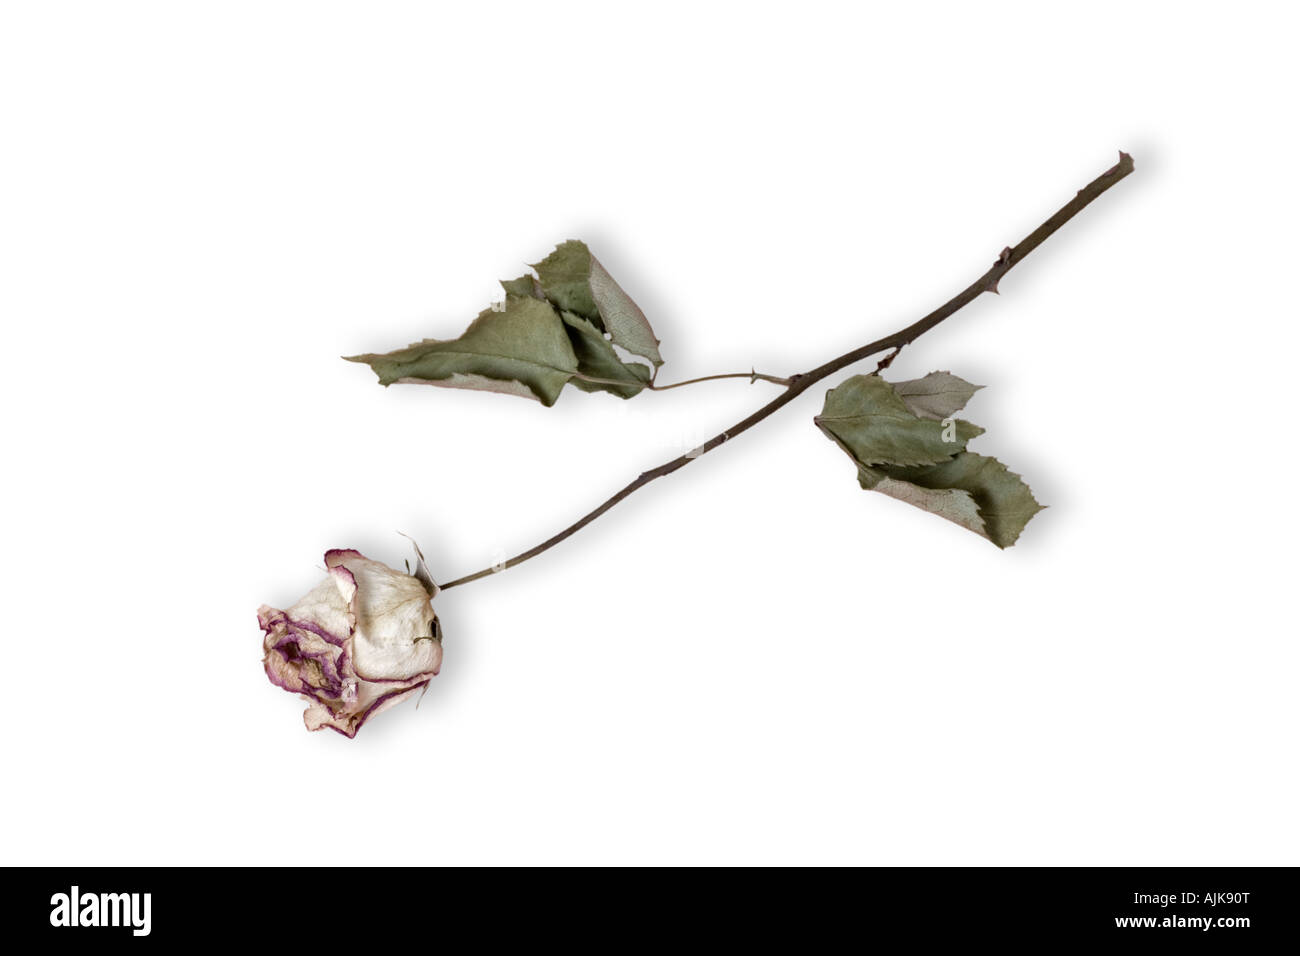 A faded and withered rose upon a white background. Rose (Rosa sp) fanée et desséchée photographiée en studio sur fond blanc. Stock Photo